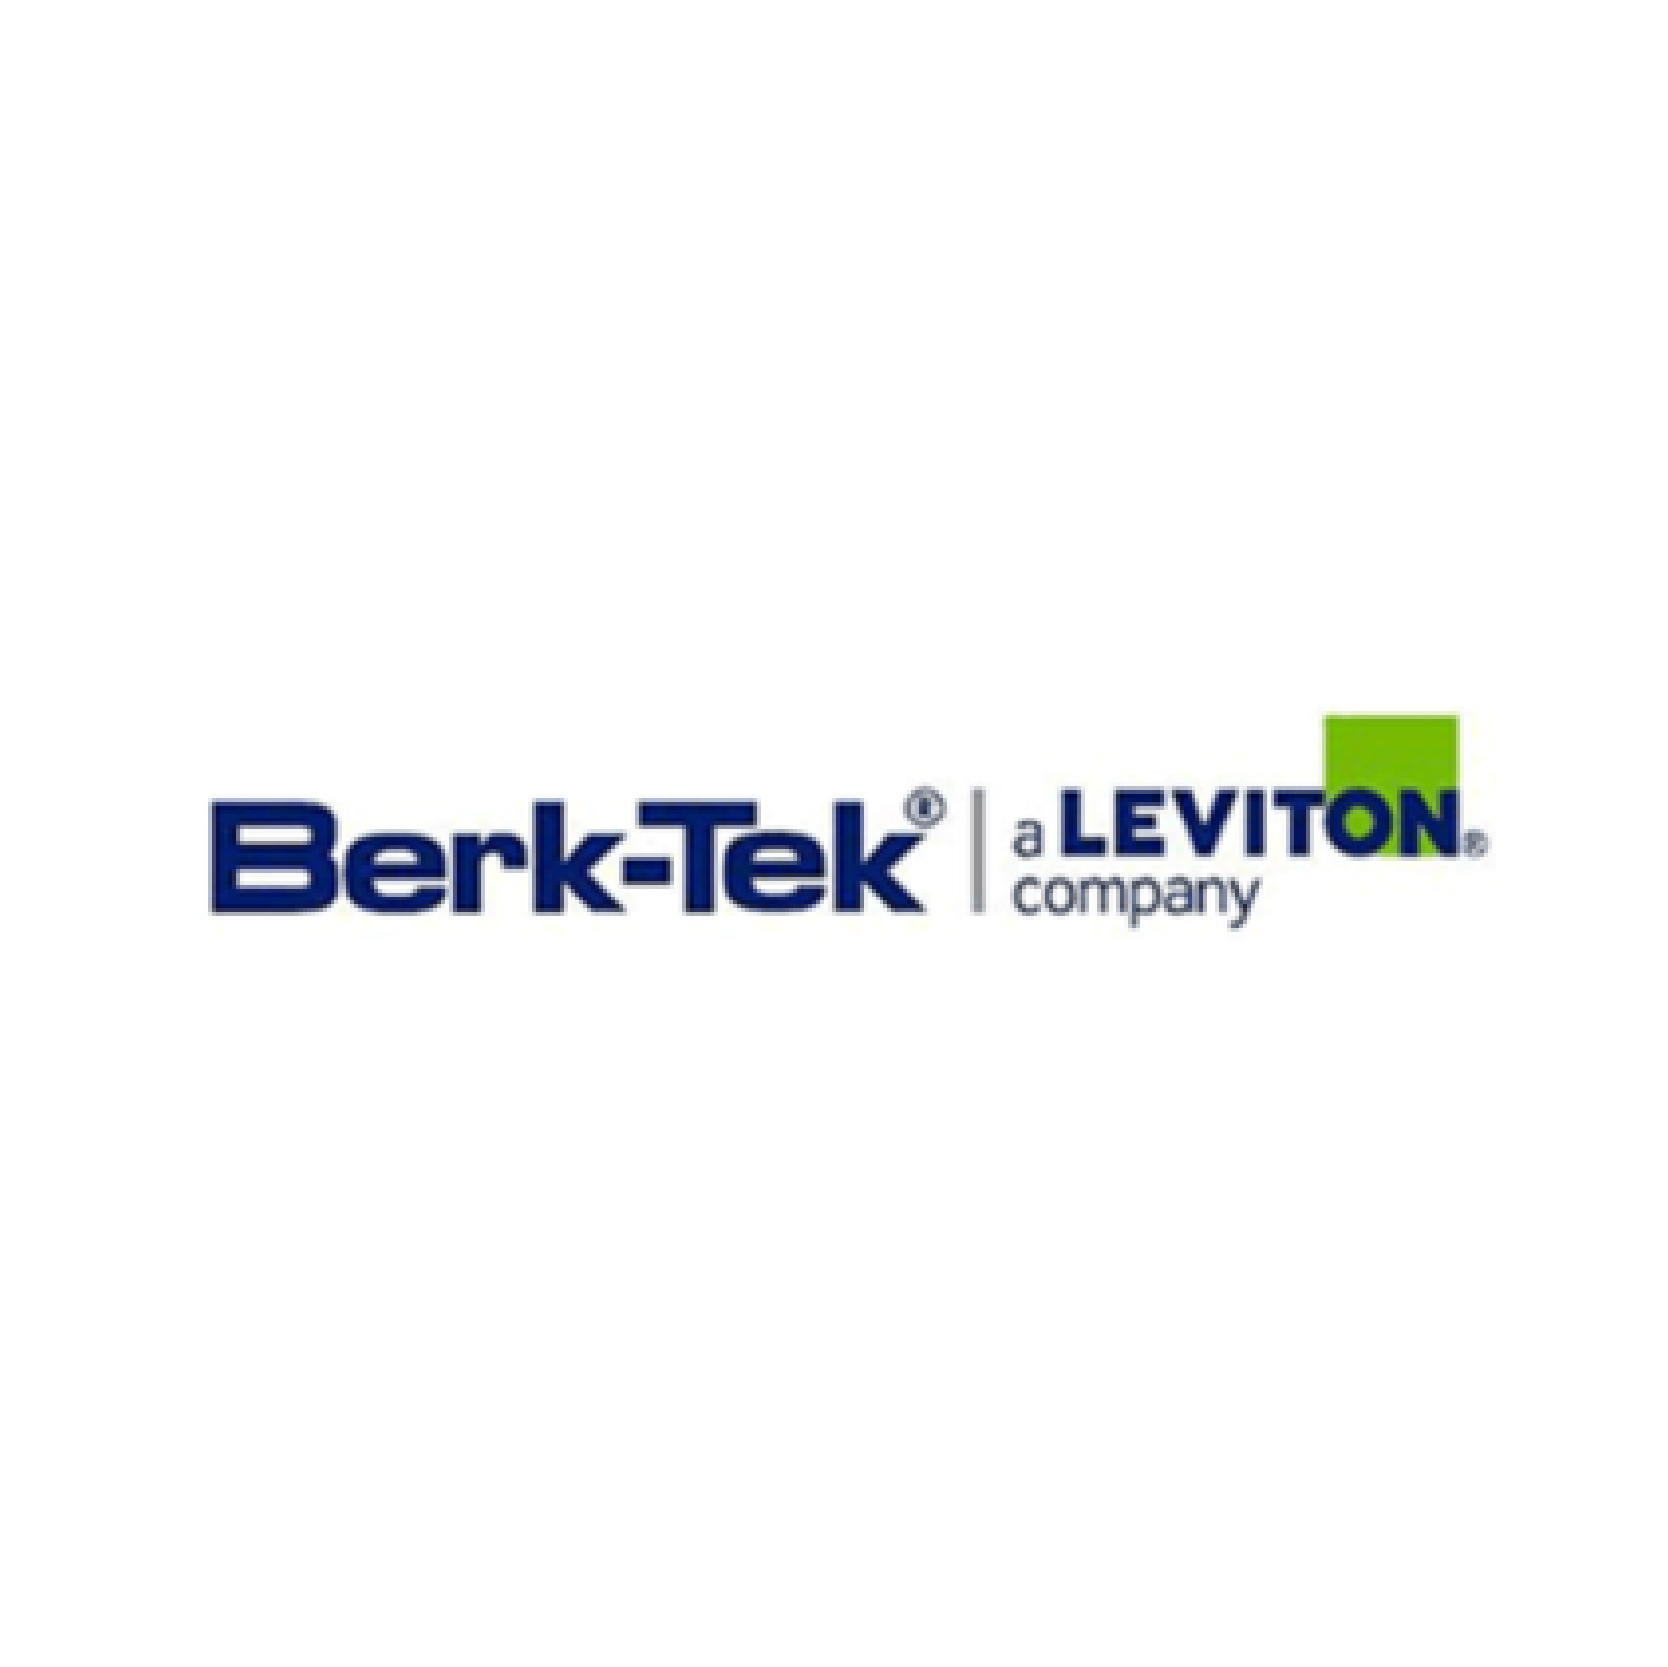 logo-berk